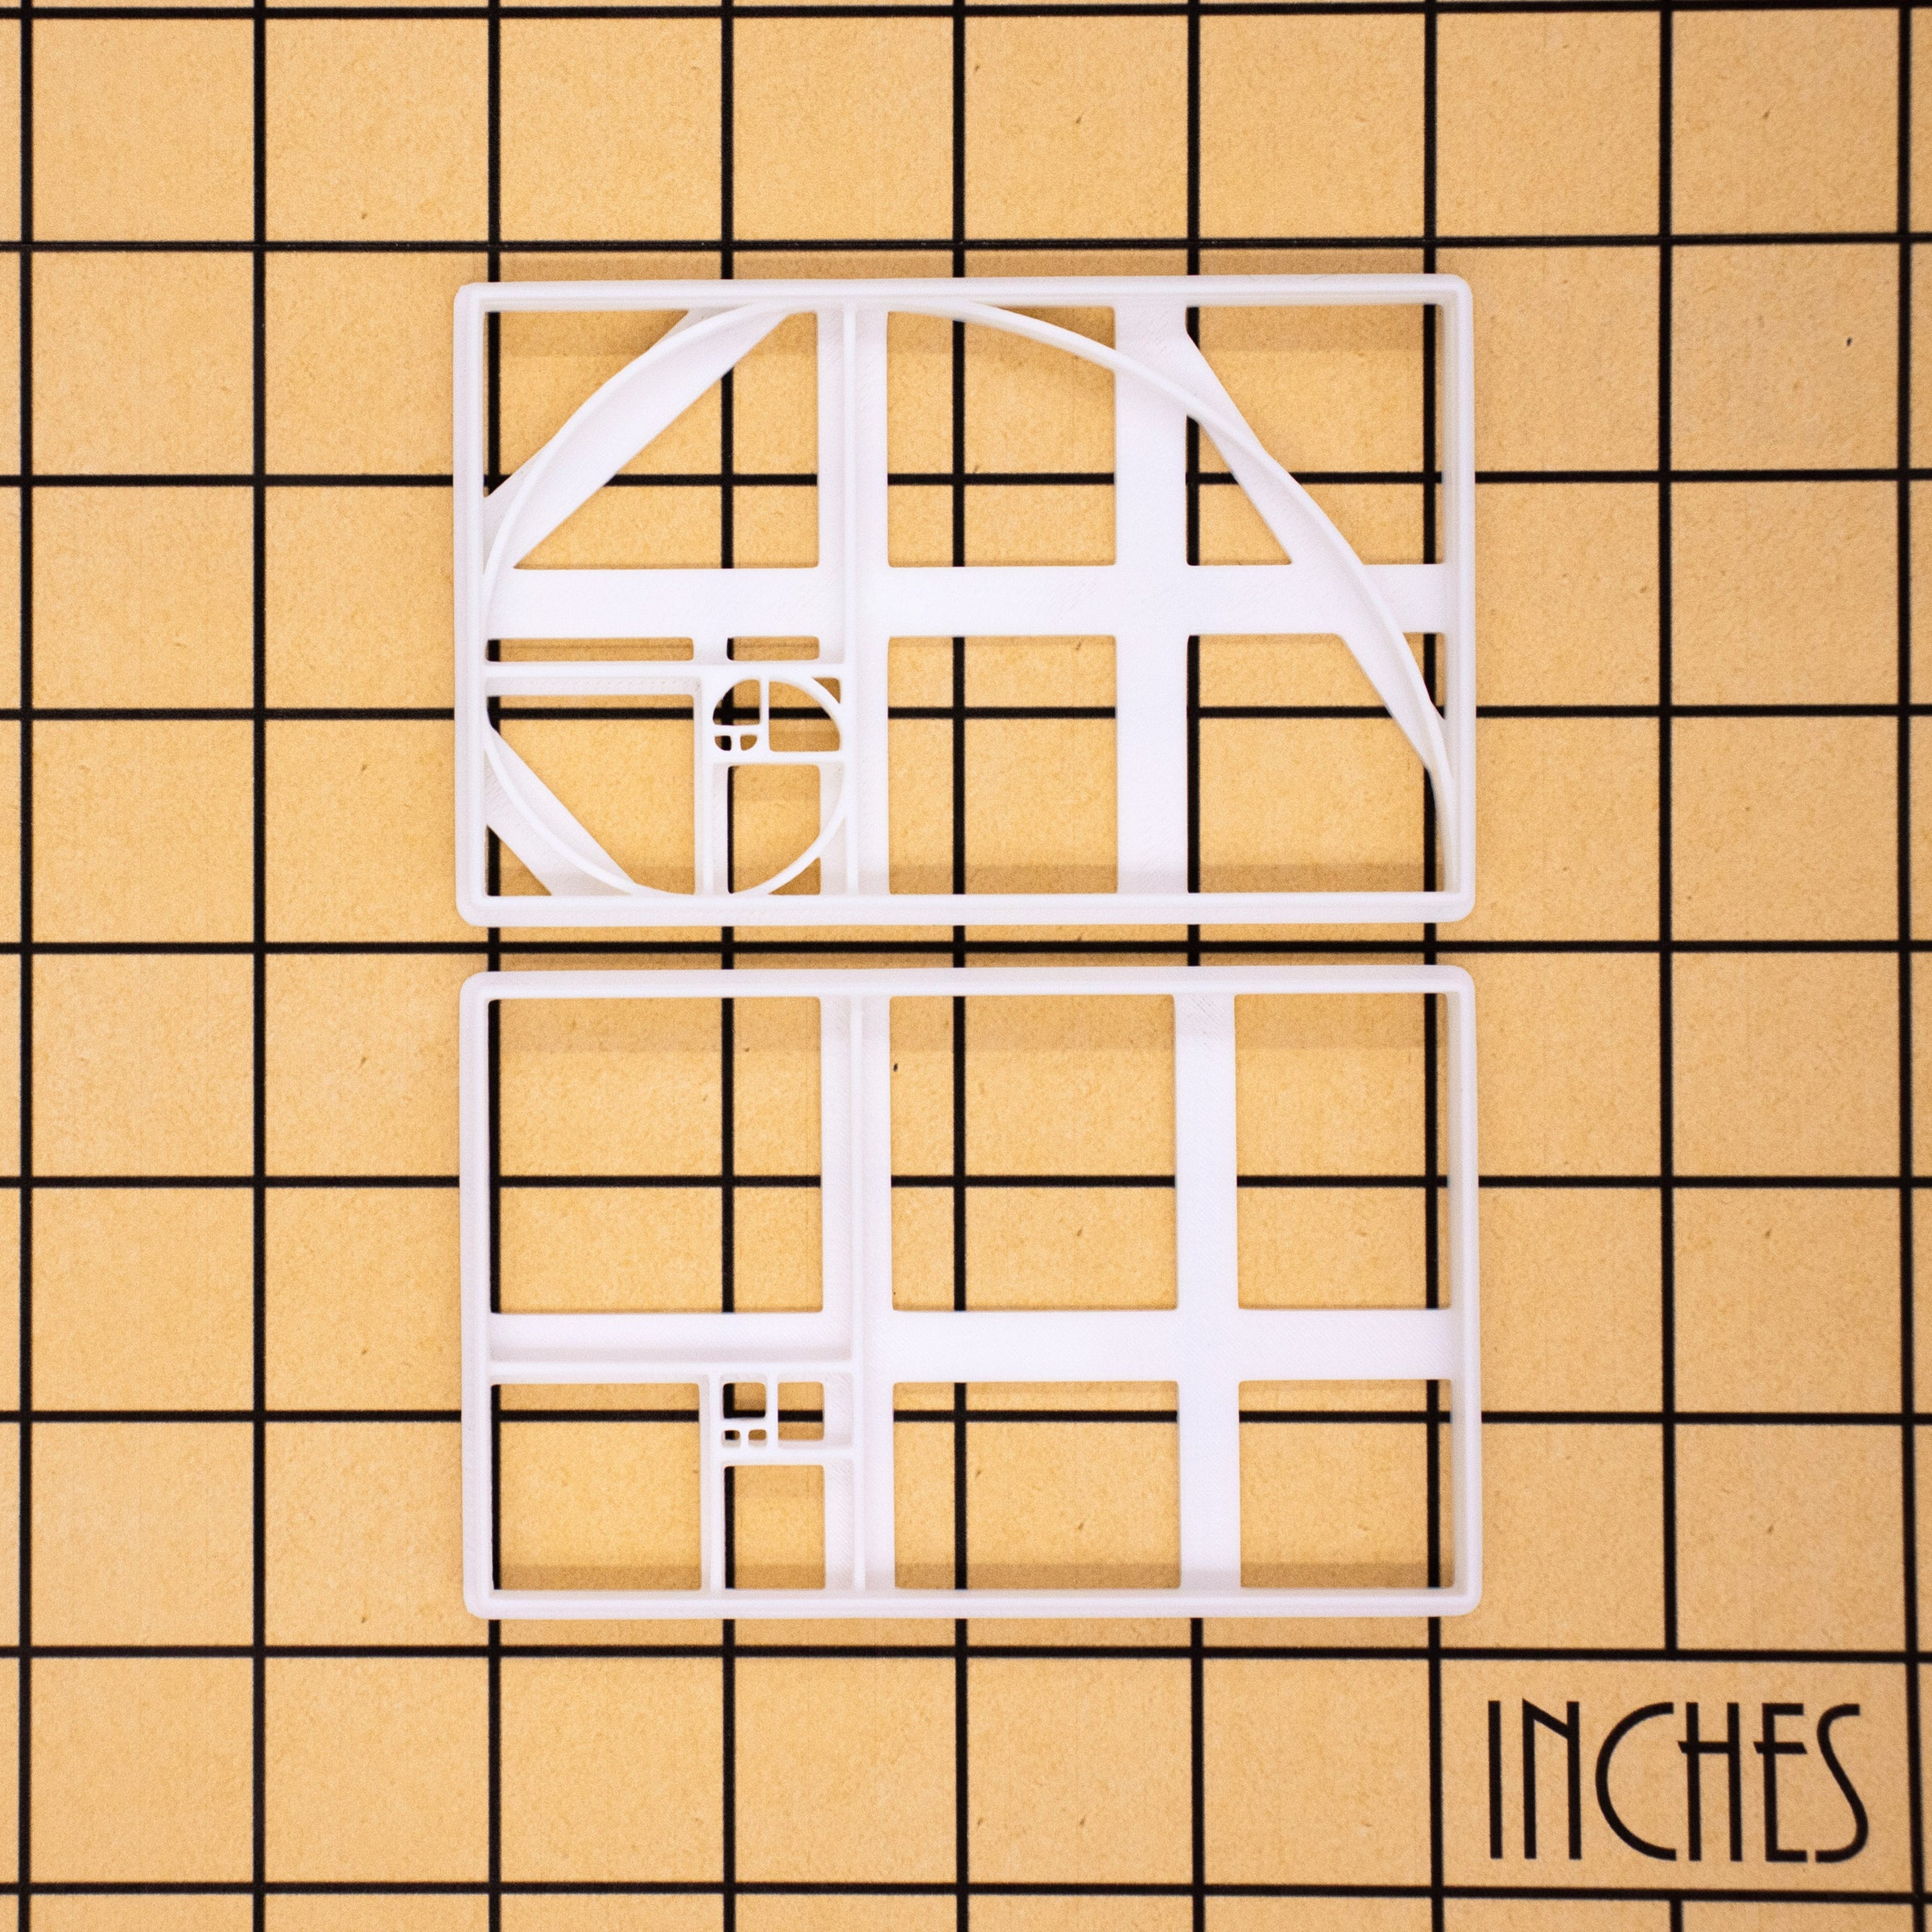 set of 2 golden ratio cookie cutters, featuring a fibonacci spiral and fibonacci tiling